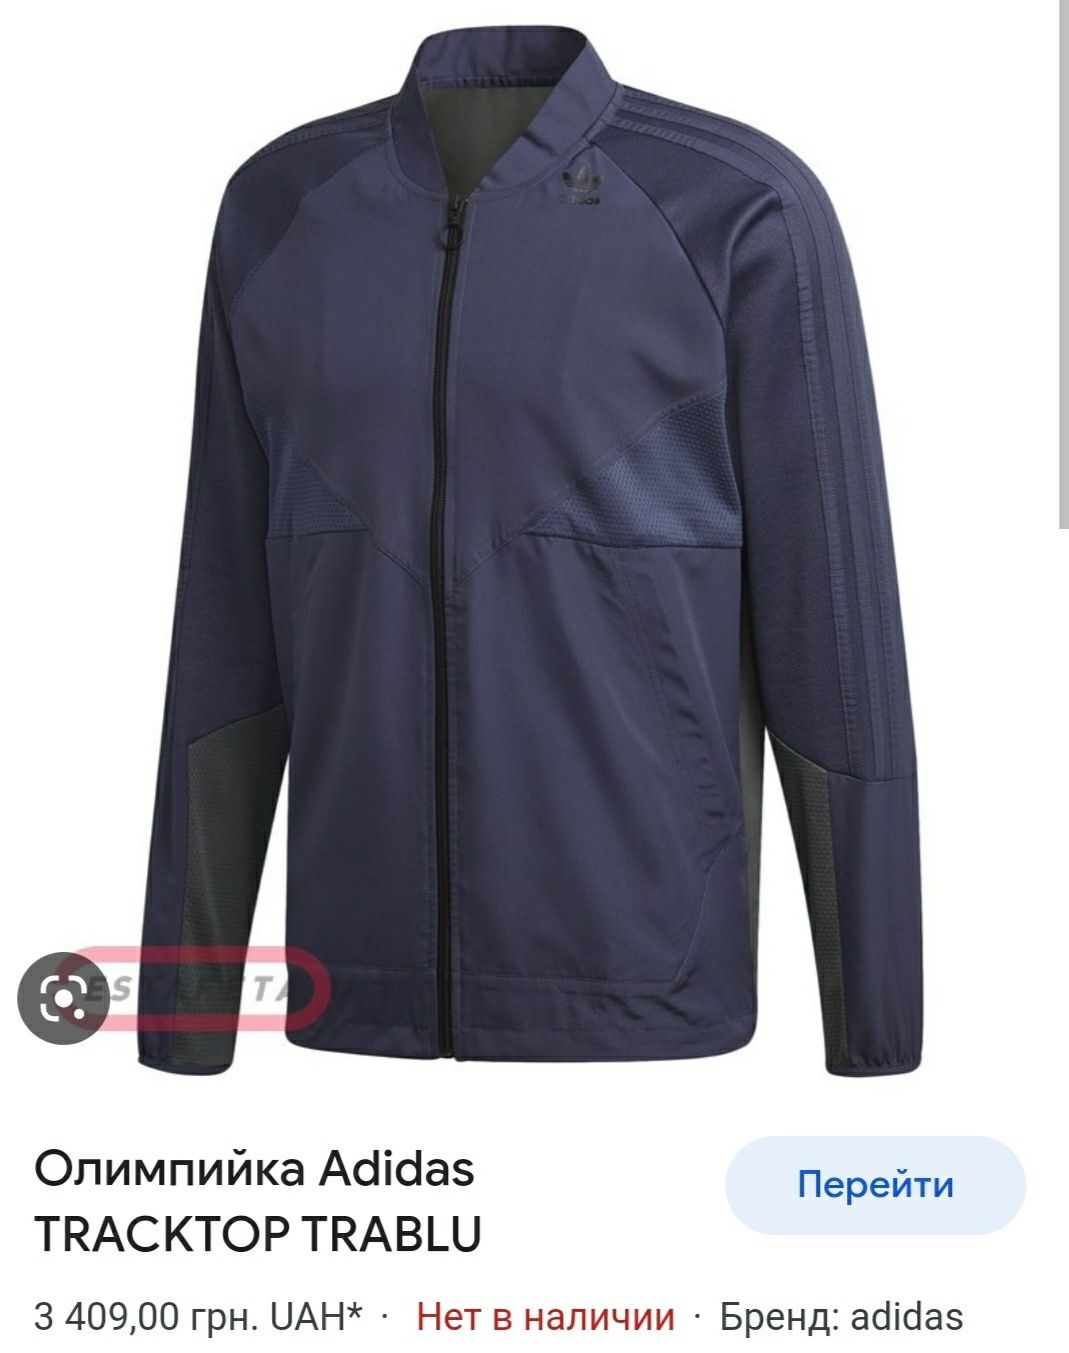 Мужская куртка, ветровка,бомпер,кофта,олимпийка adidas tracktop trablu